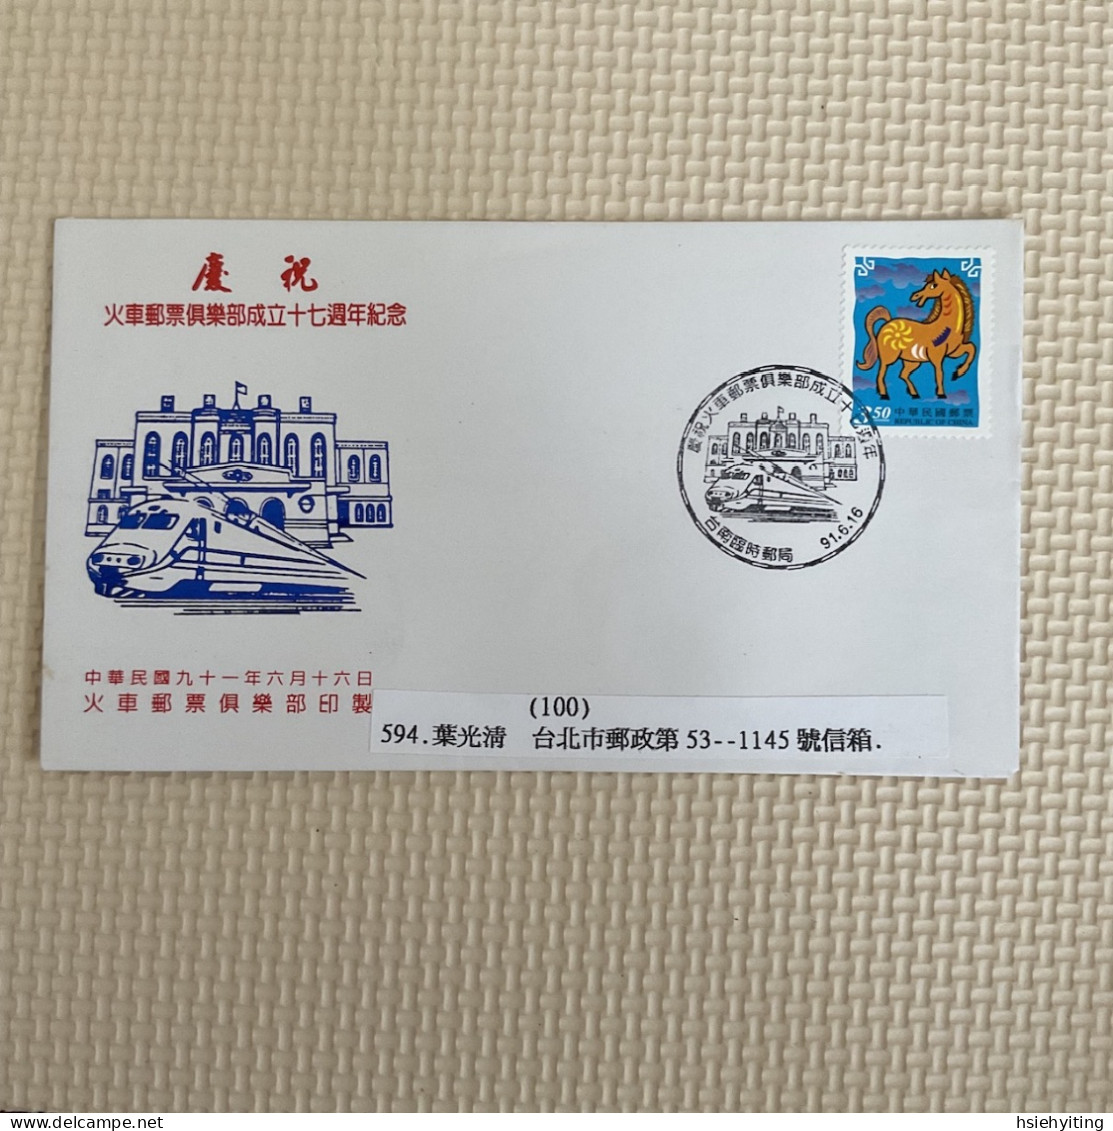 Taiwanese Train Postmarks - Treinen